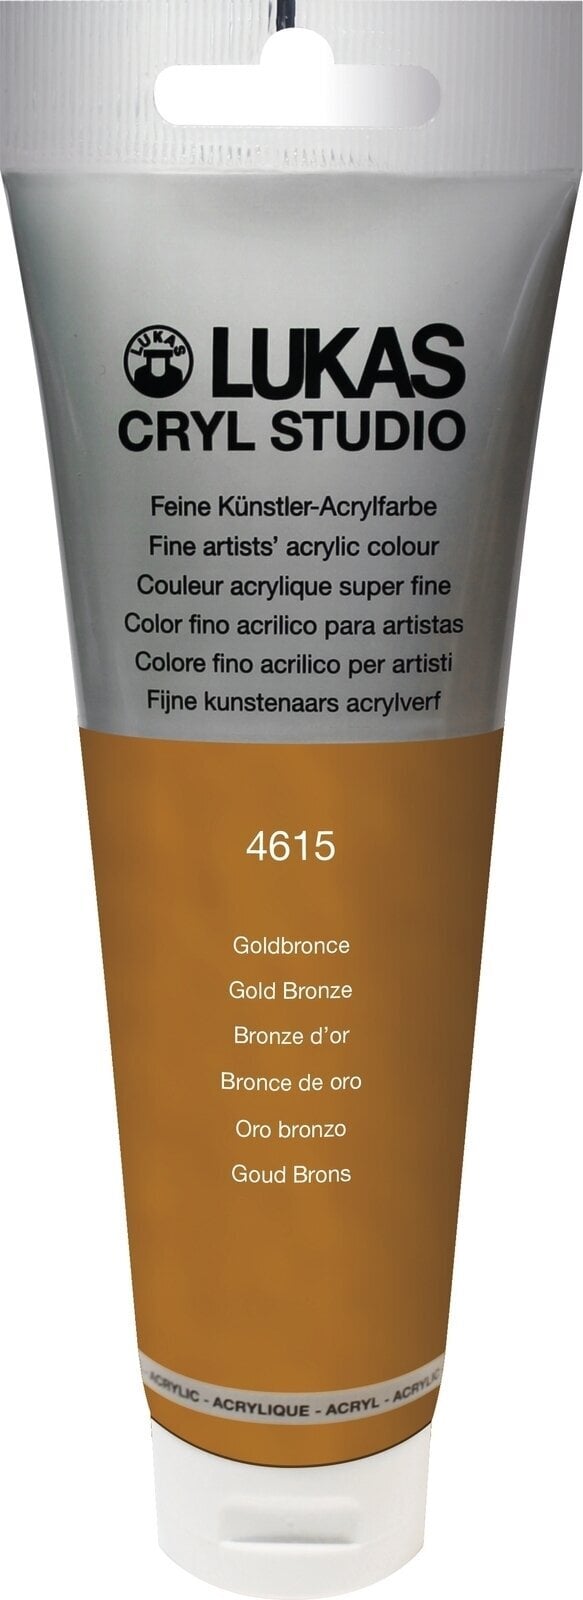 Tinta acrílica Lukas Cryl Studio Tinta acrílica 125 ml Gold Bronze